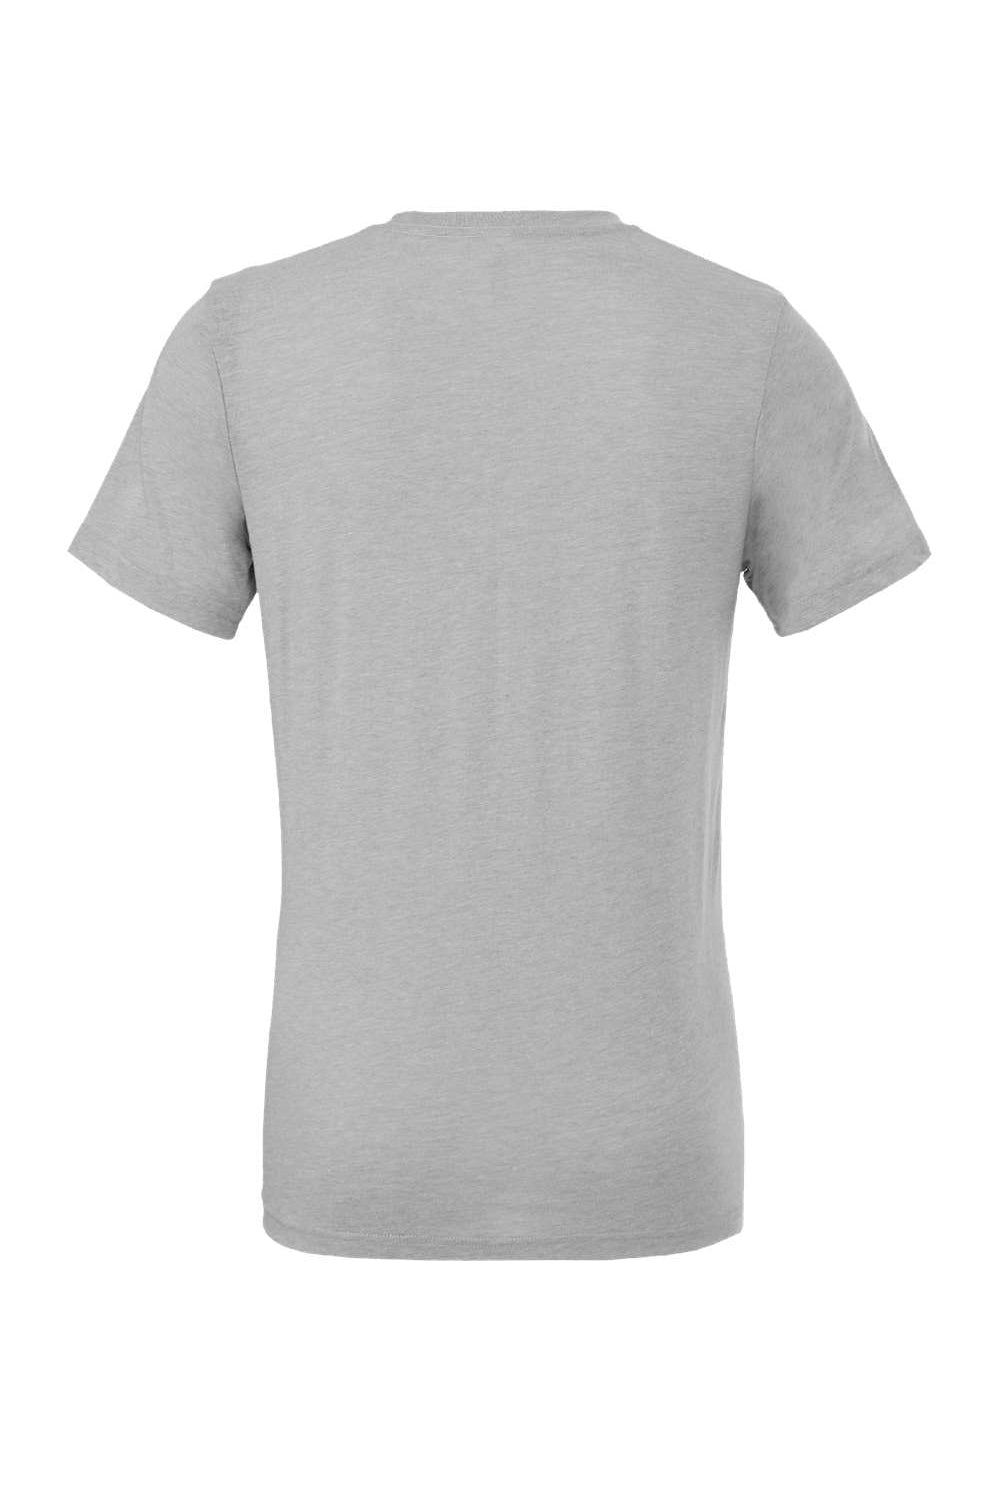 Bella + Canvas BC3413/3413C/3413 Mens Short Sleeve Crewneck T-Shirt Athletic Grey Flat Back